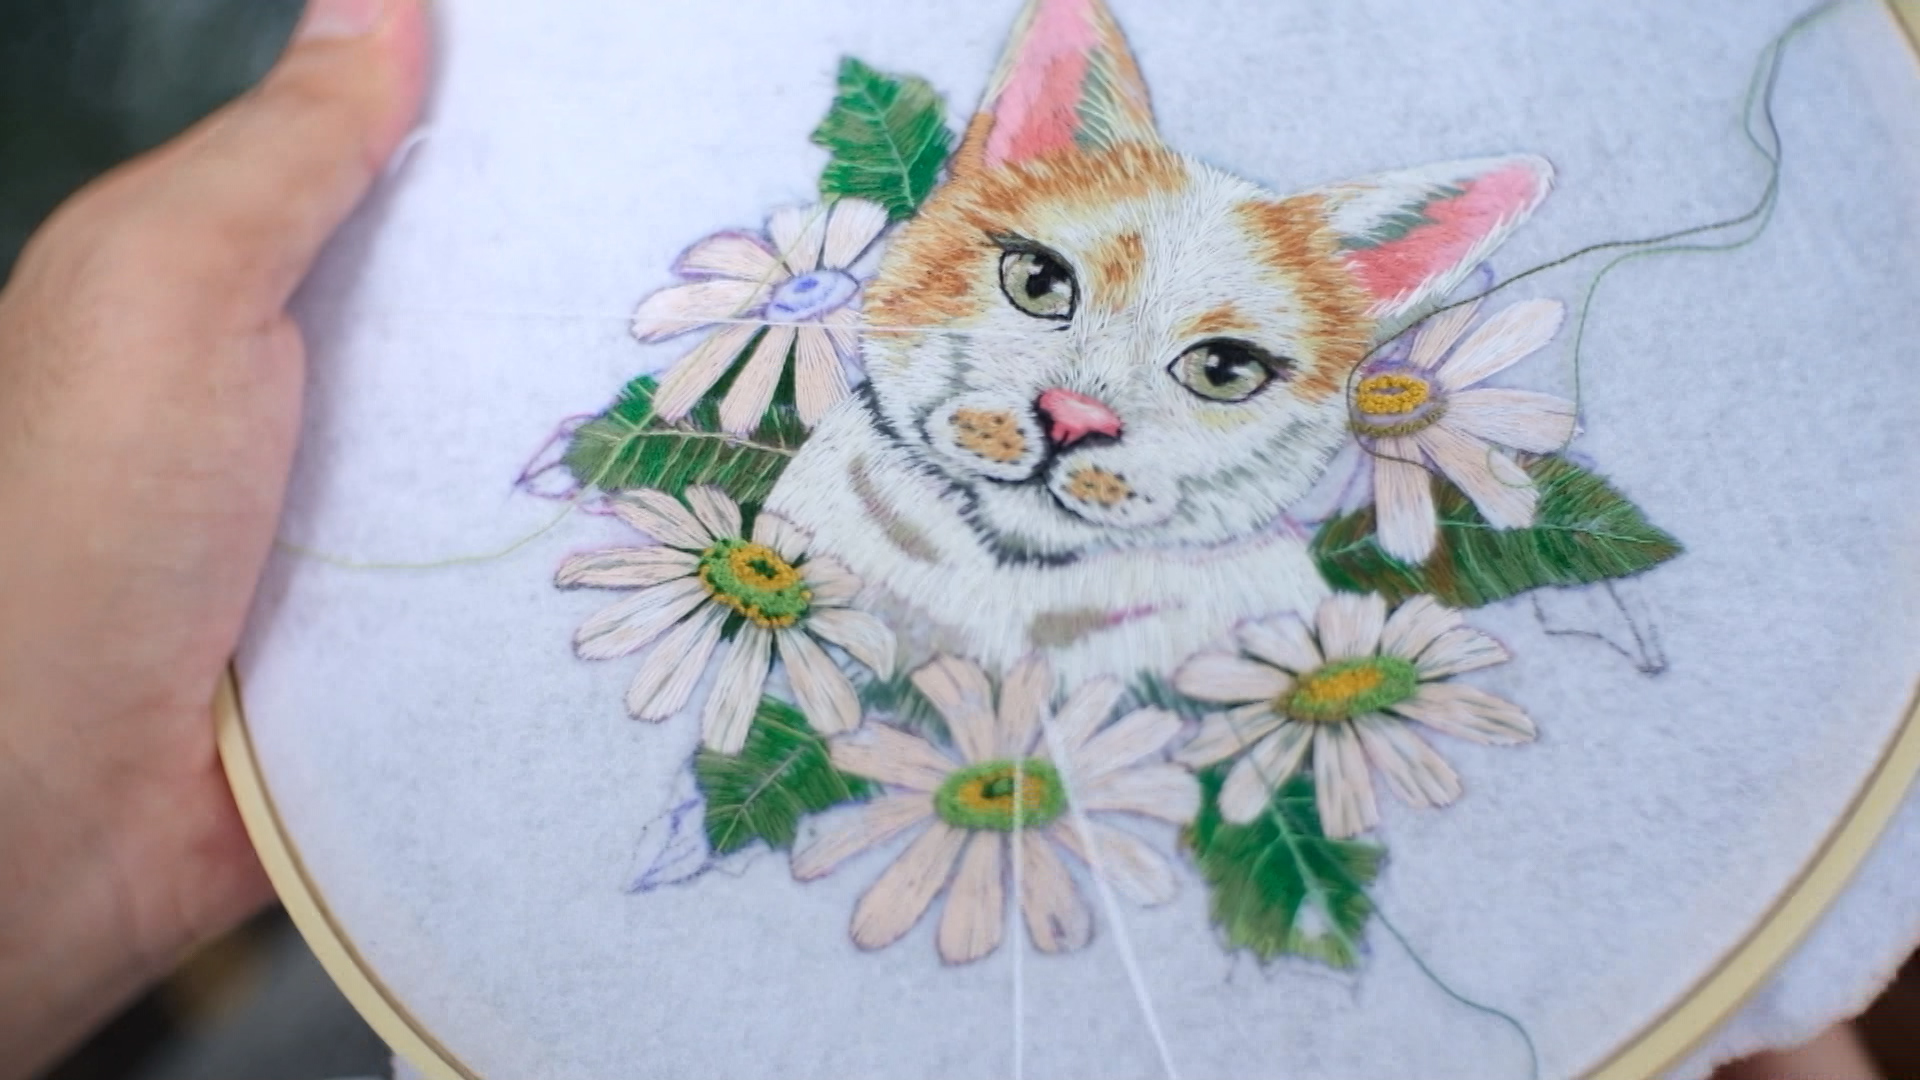 Ho Chi Minh City embroiderer creates lifelike artwork